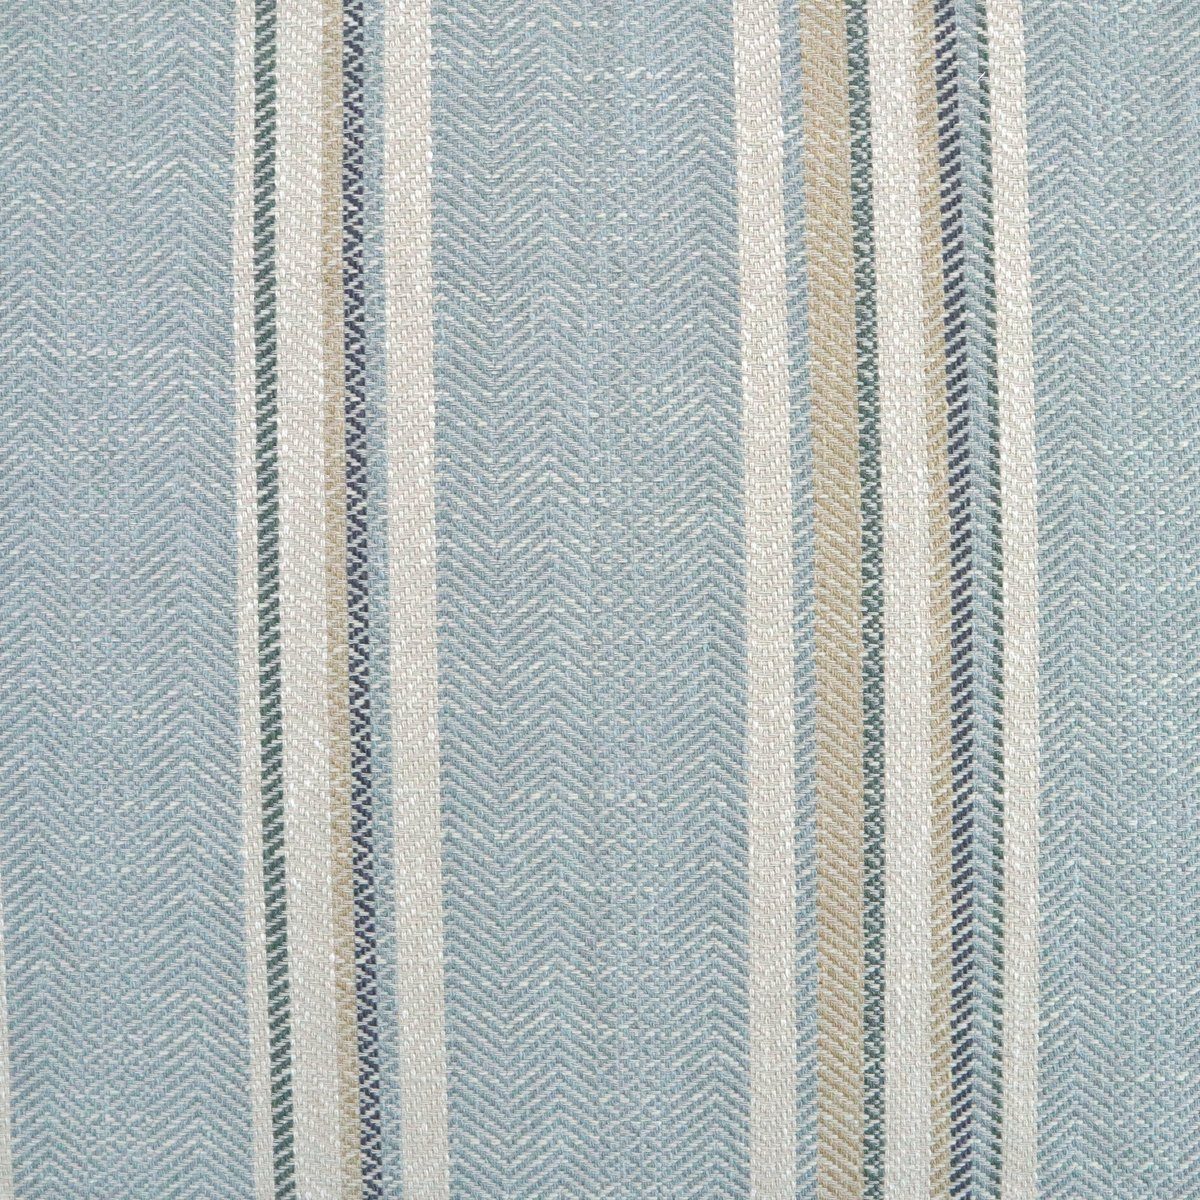 Stofferia Stoff Polsterstoff Jacquard Streifen Indus Blaugrau, Breite 139 cm, Meterware